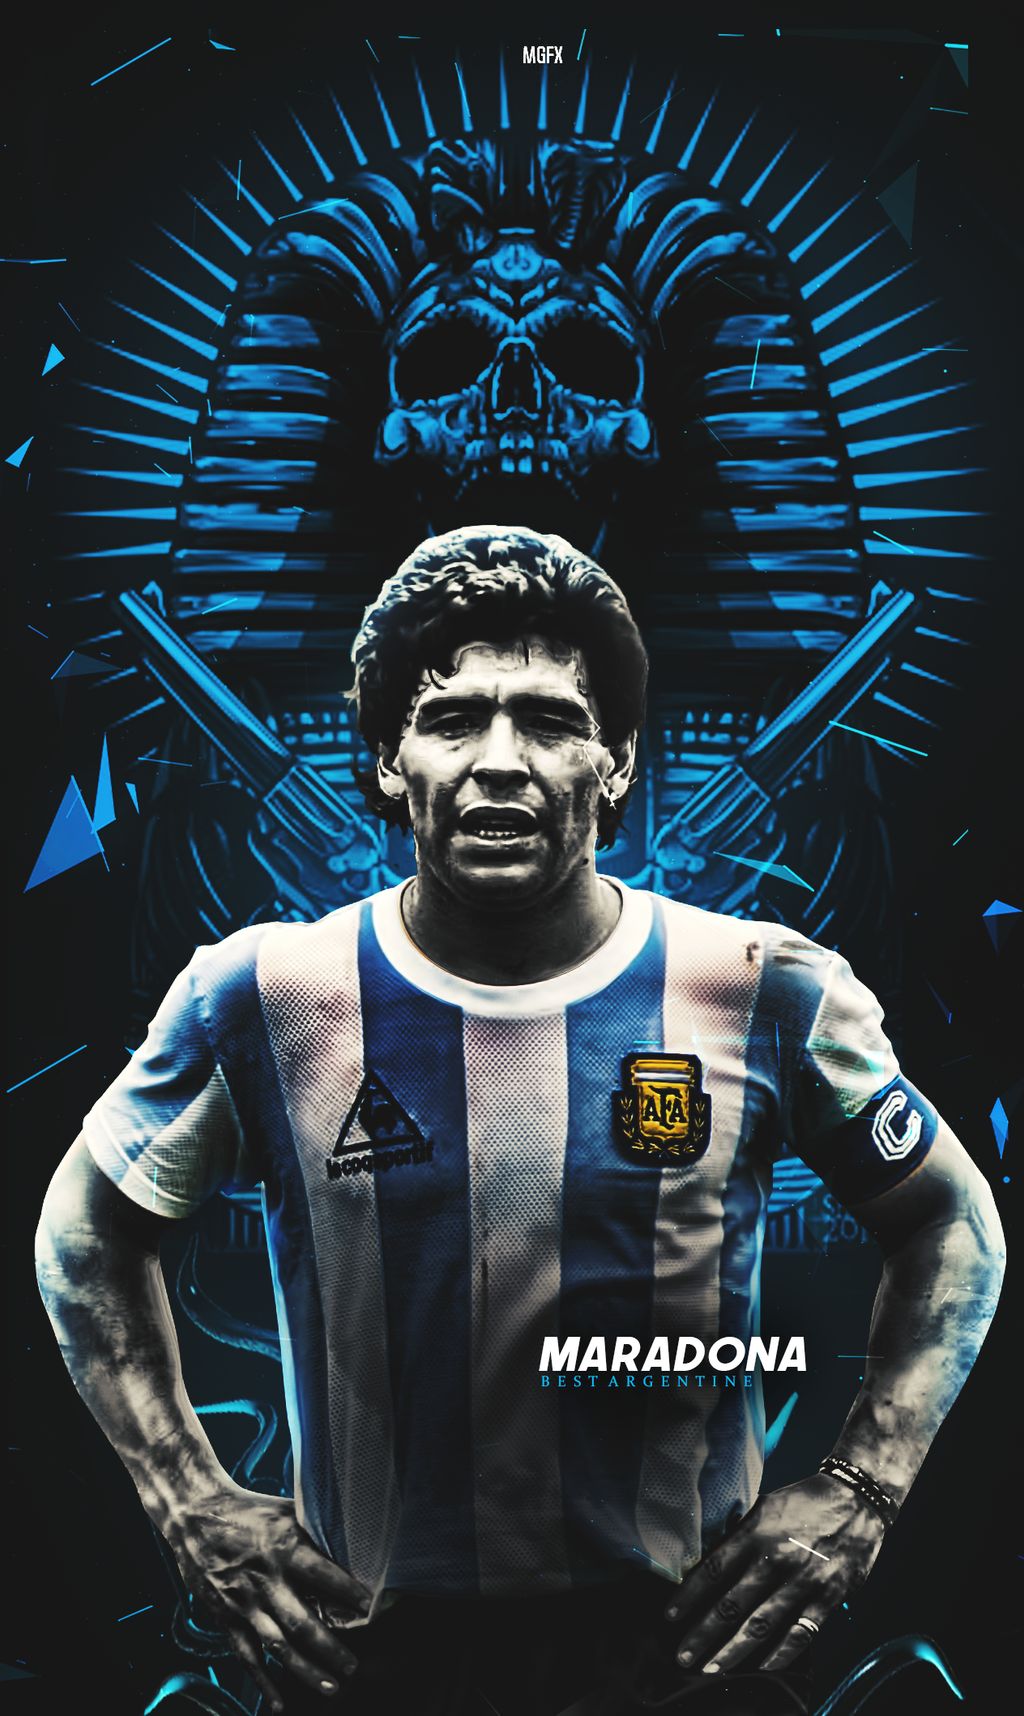 Maradona Wallpaper - NawPic